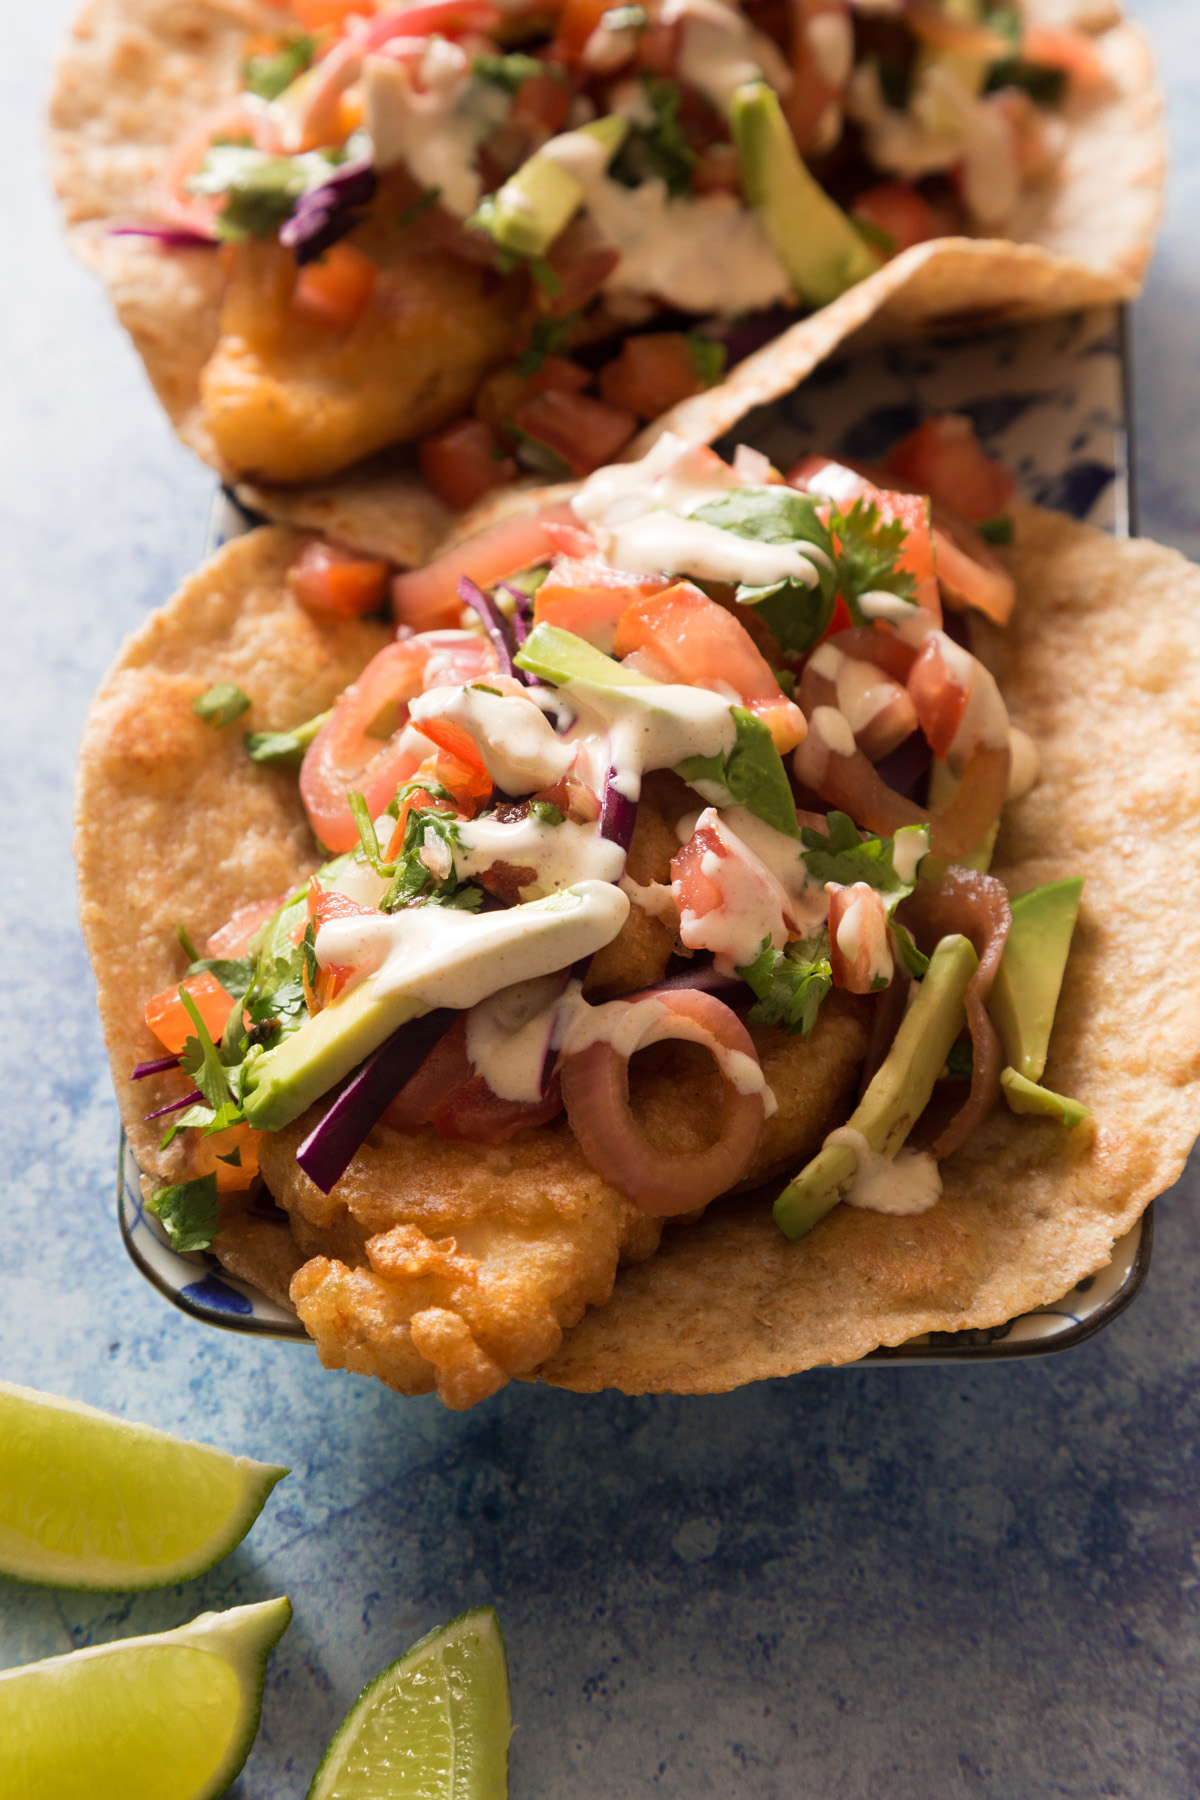 Baja Fish Tacos with white sauce